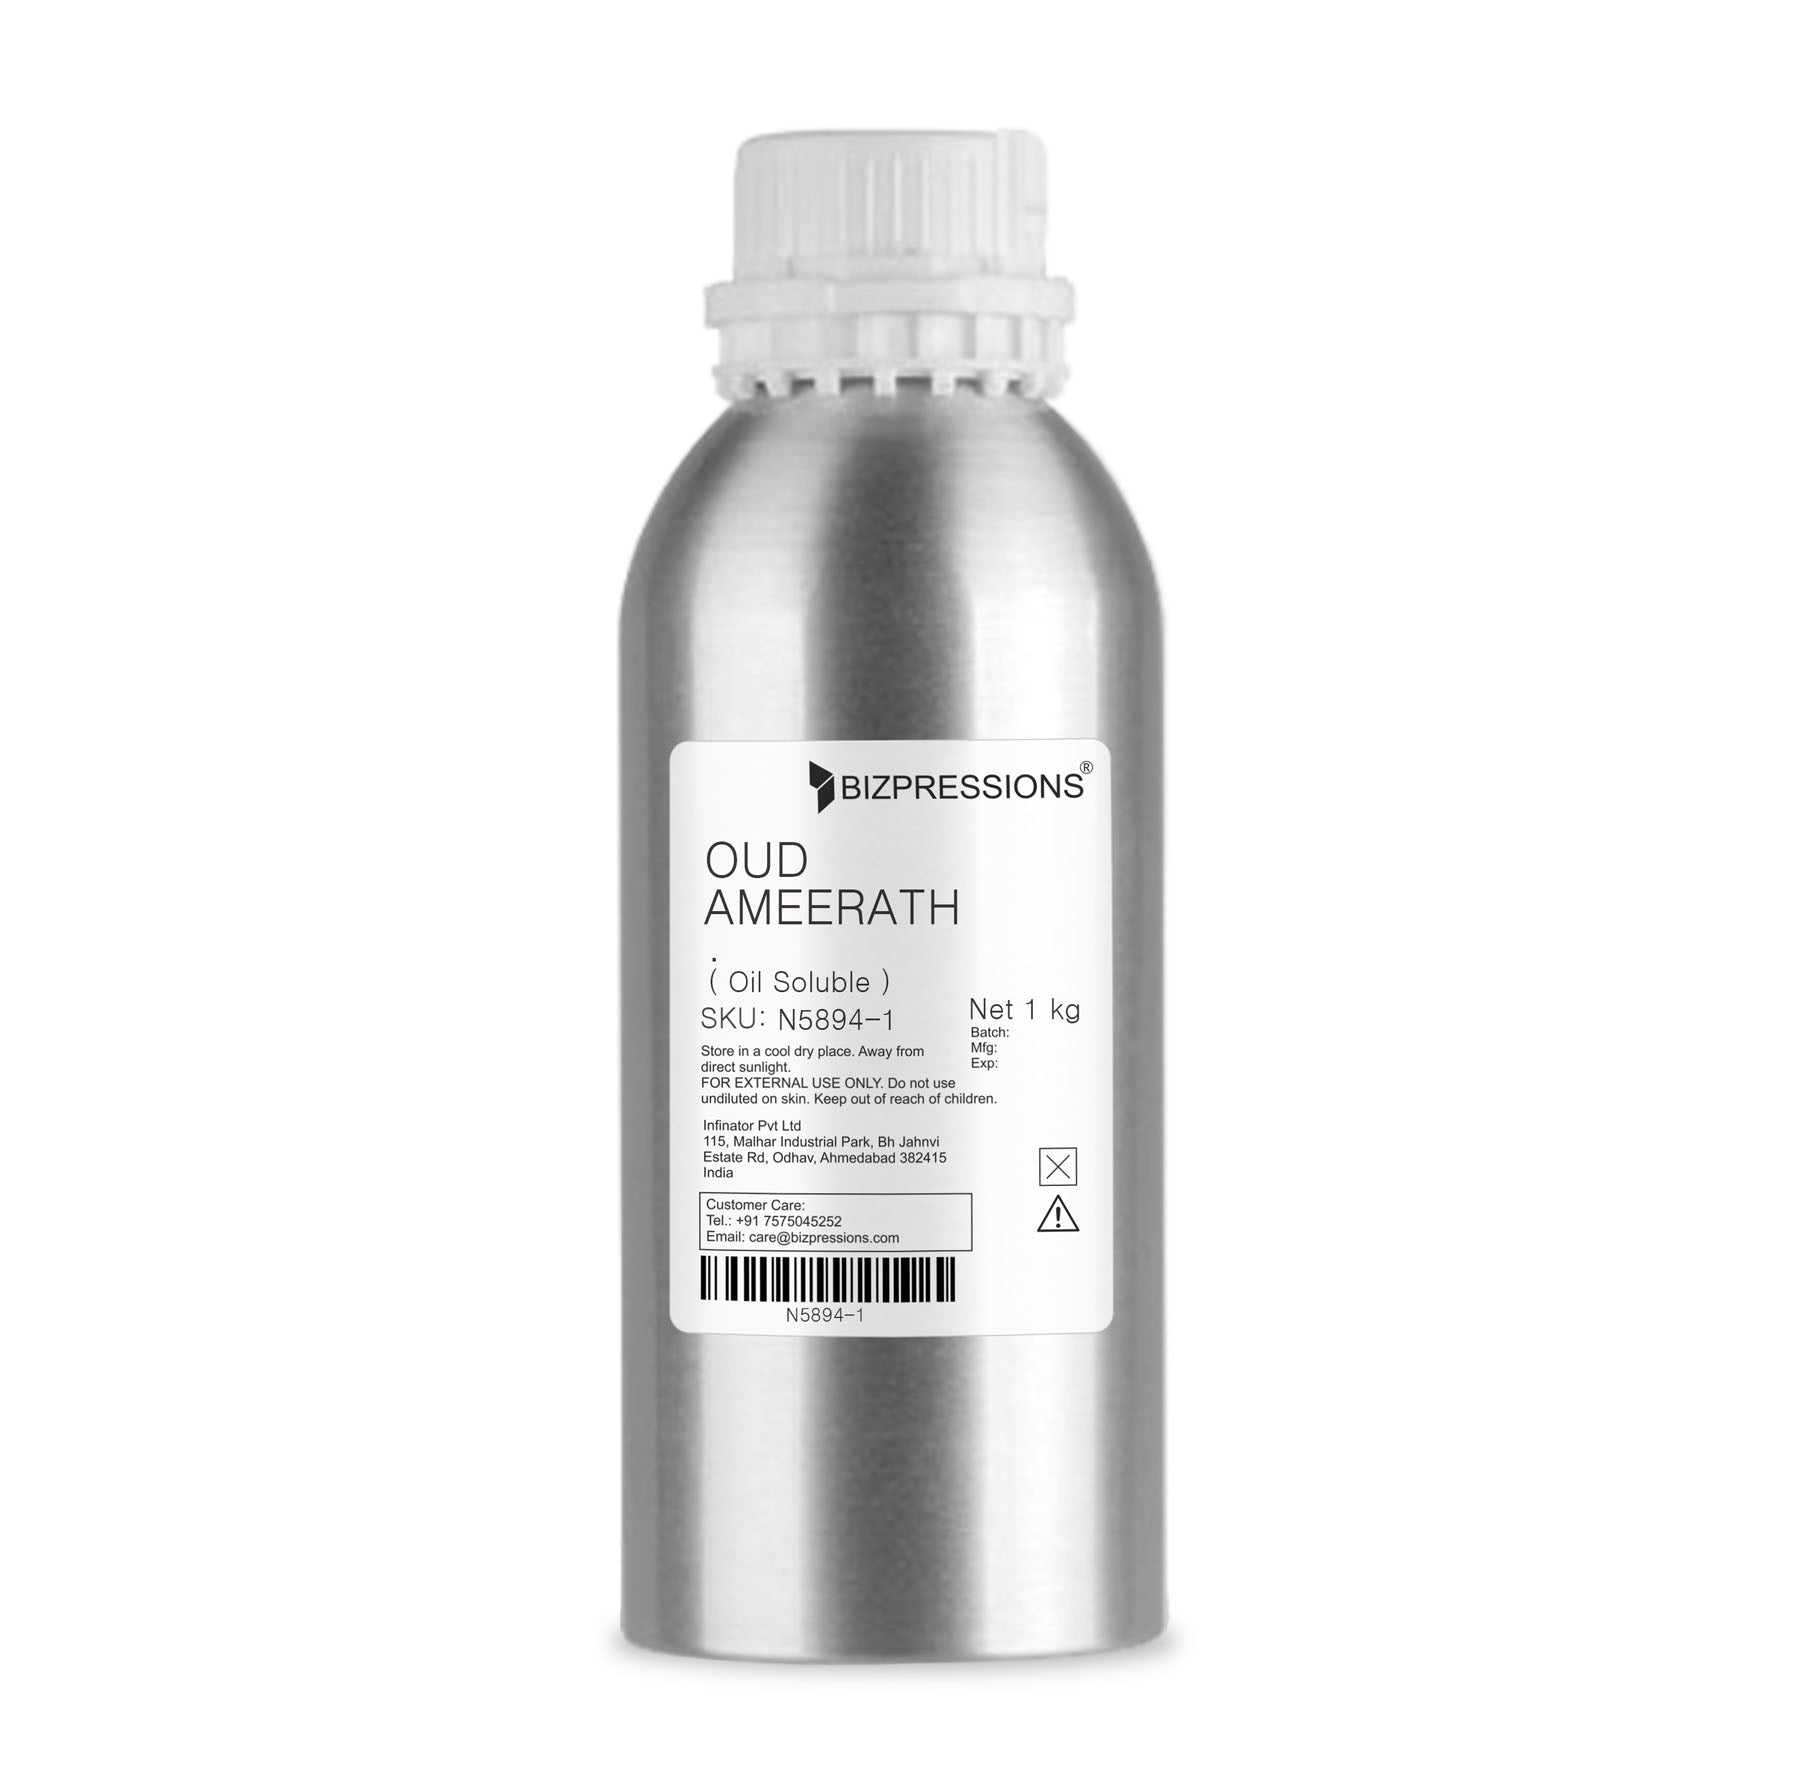 OUD AMEERATH - Fragrance ( Oil Soluble ) - 1 kg